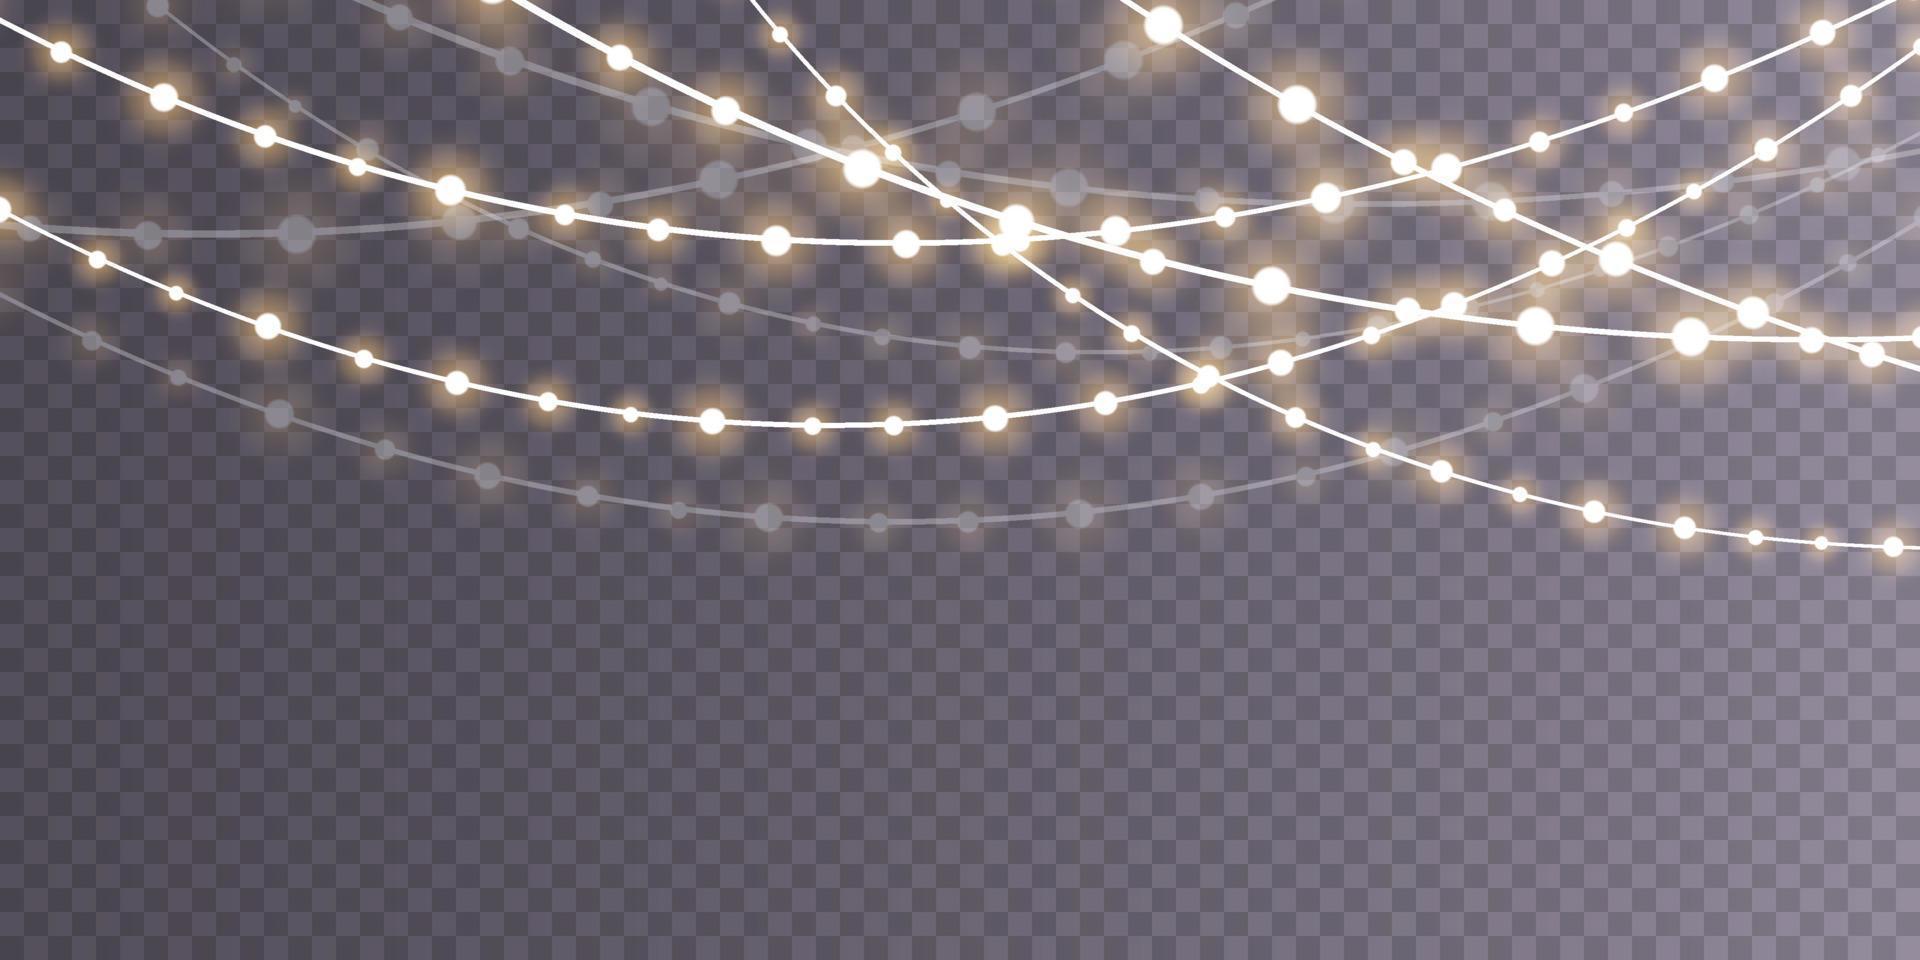 Christmas garland isolated. Glowing yellow light bulbs. vector